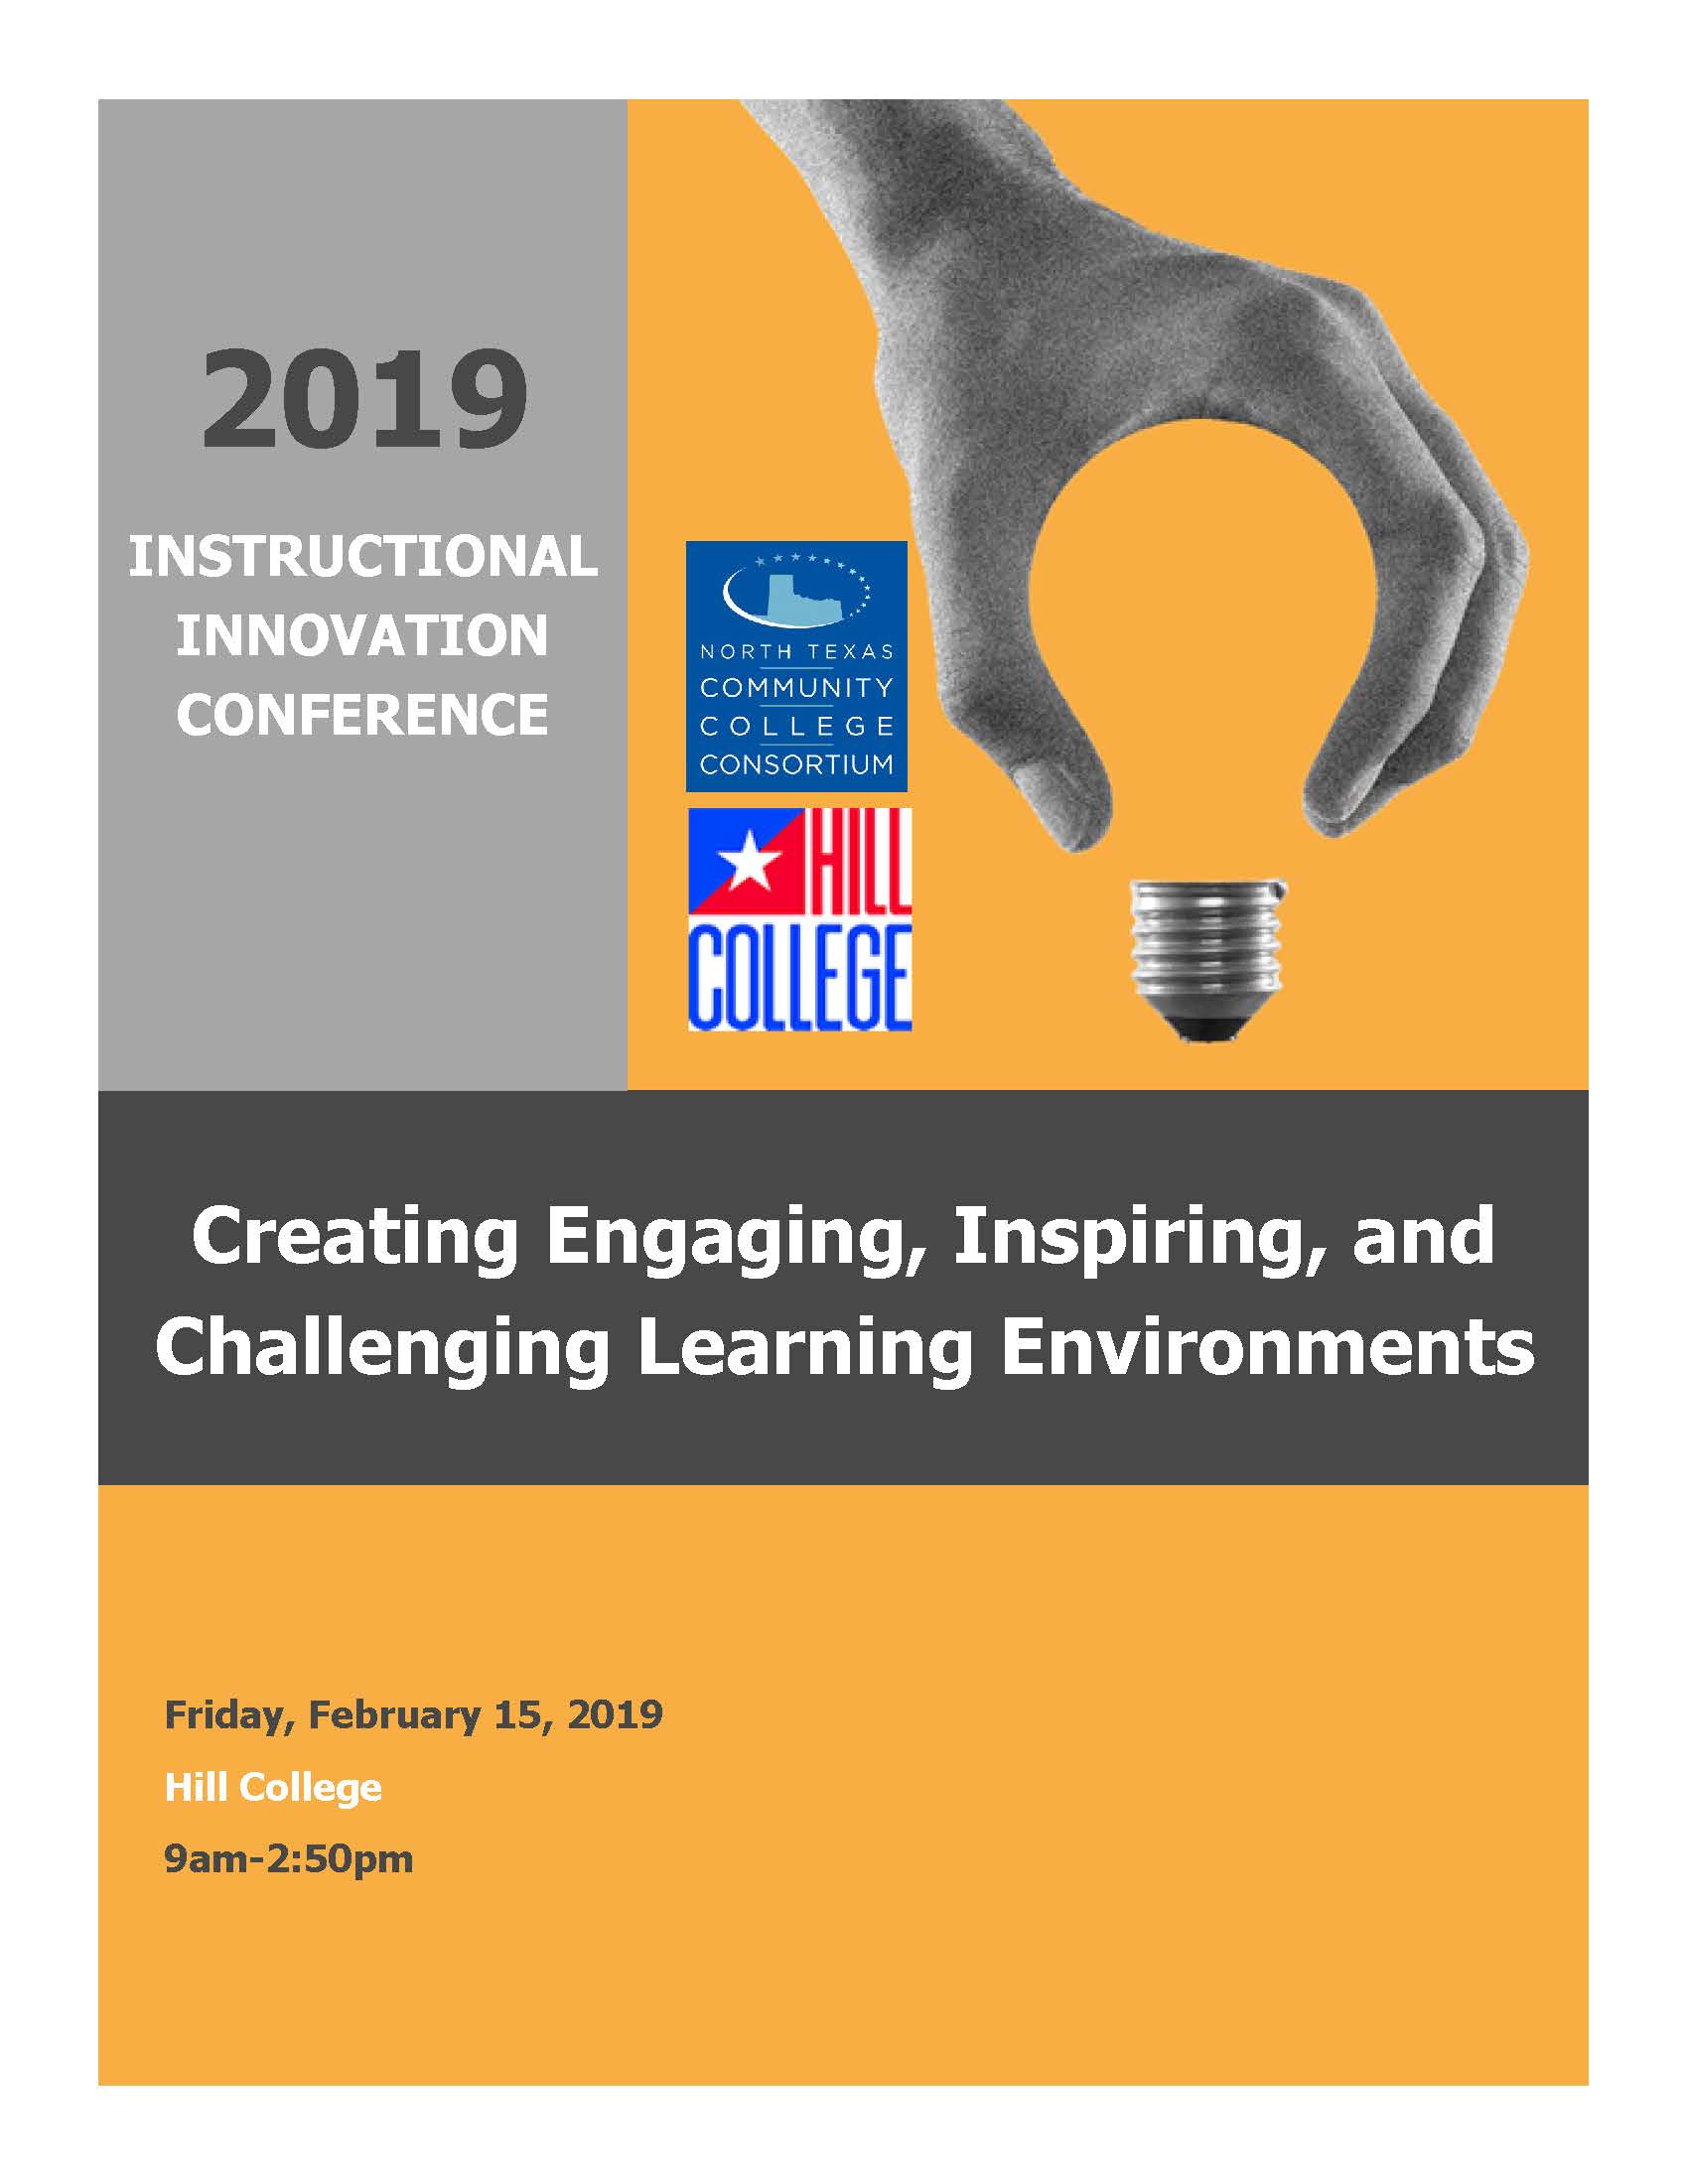 2019 Instructional Innovation Conference Program Cover